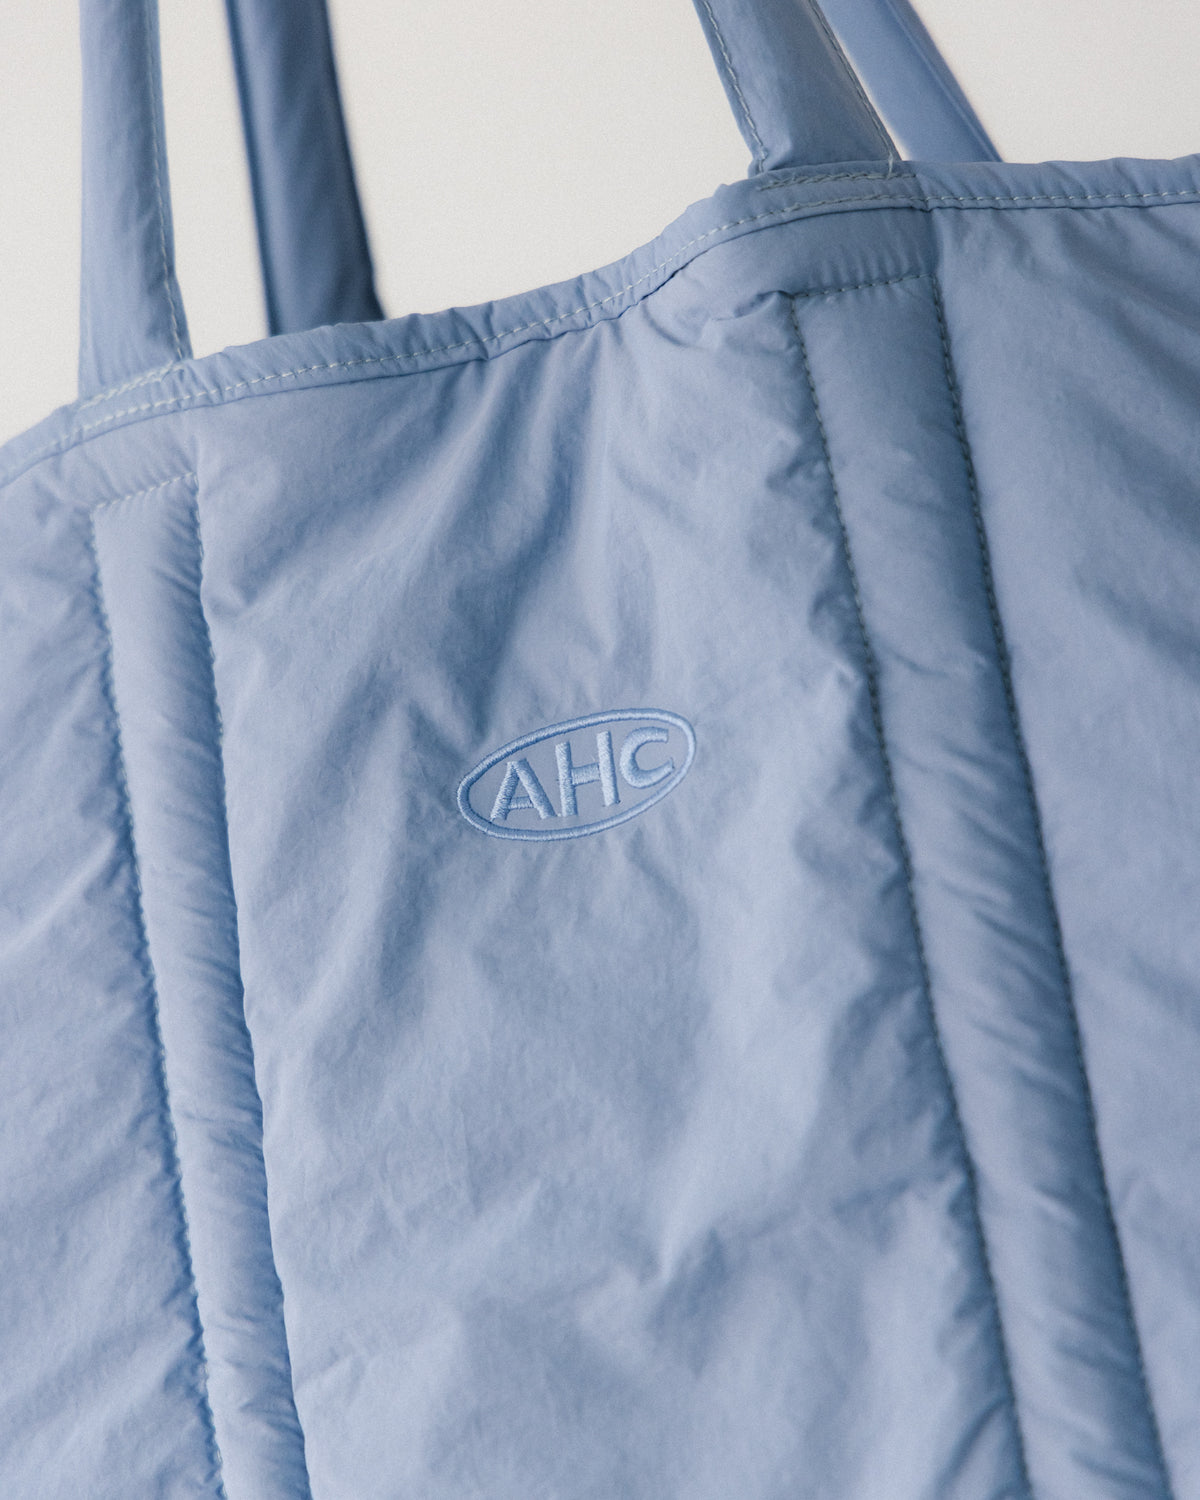 Aim Higher Club Convertible Cloud Tote Bag In Baby Blue